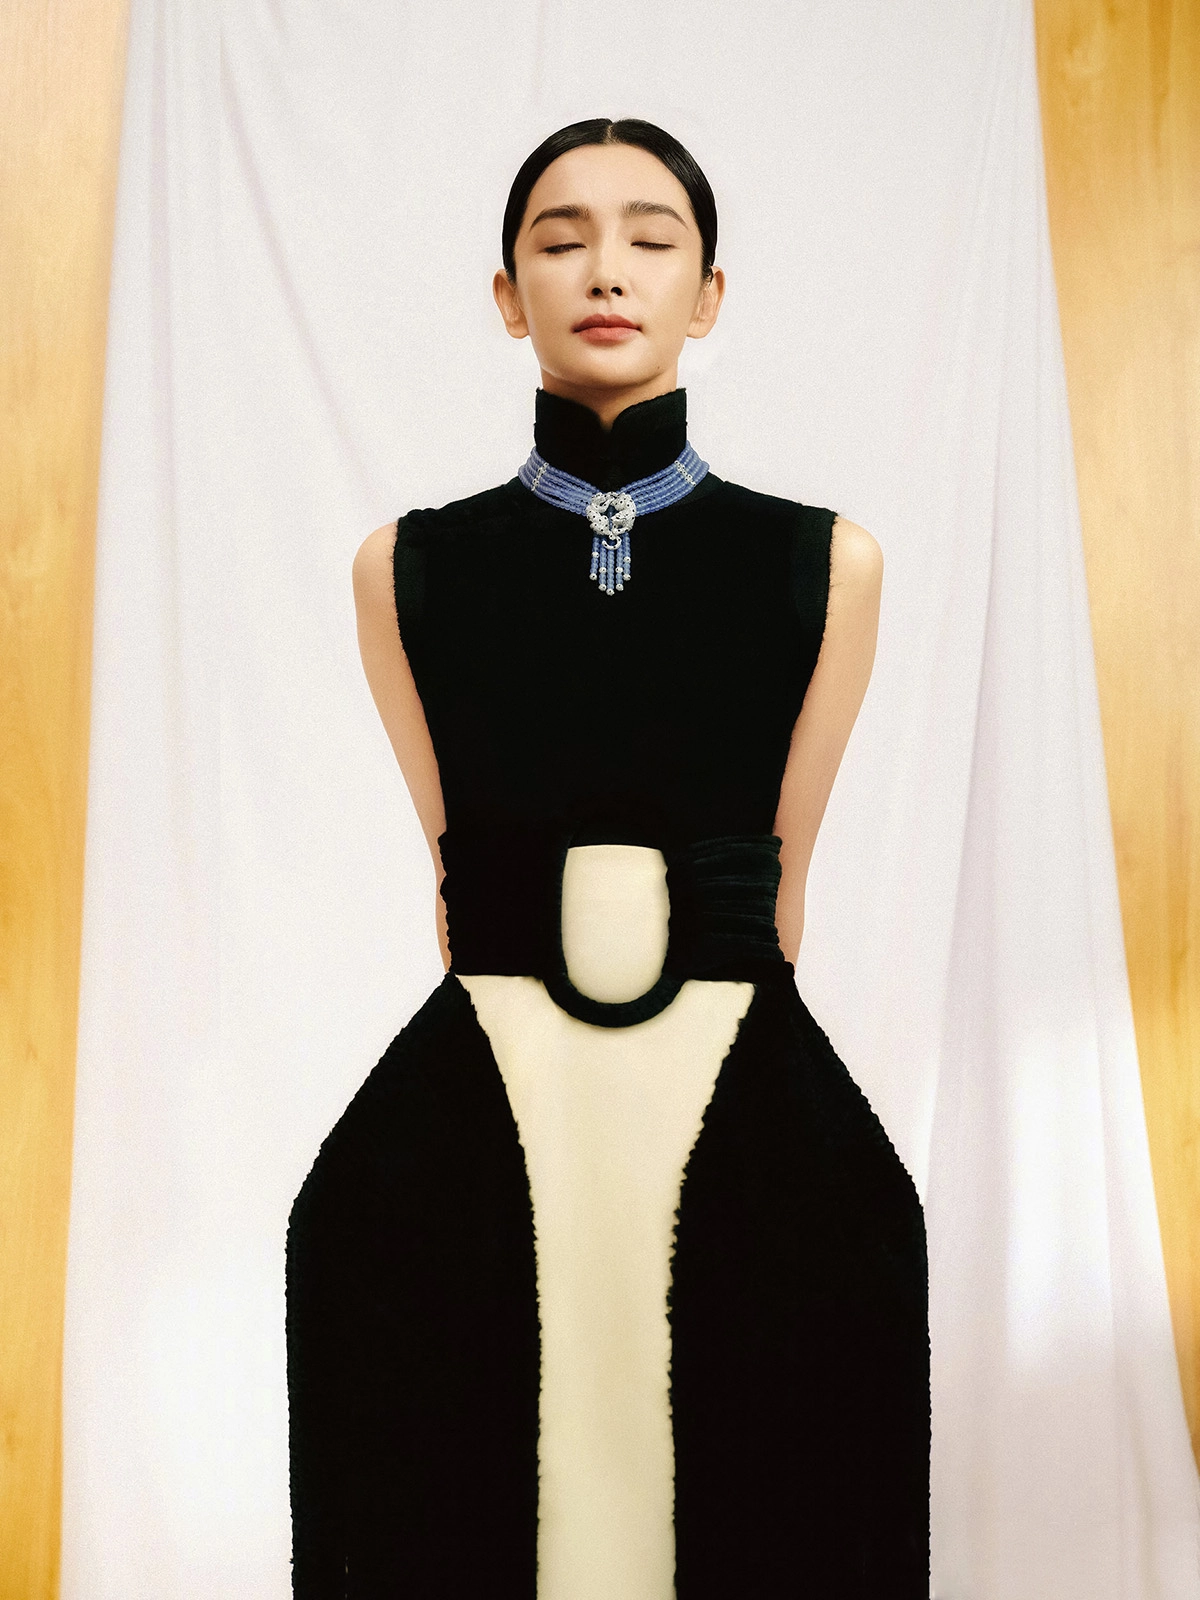 Li Bingbing covers Vogue China November 2022 by Hailun Ma